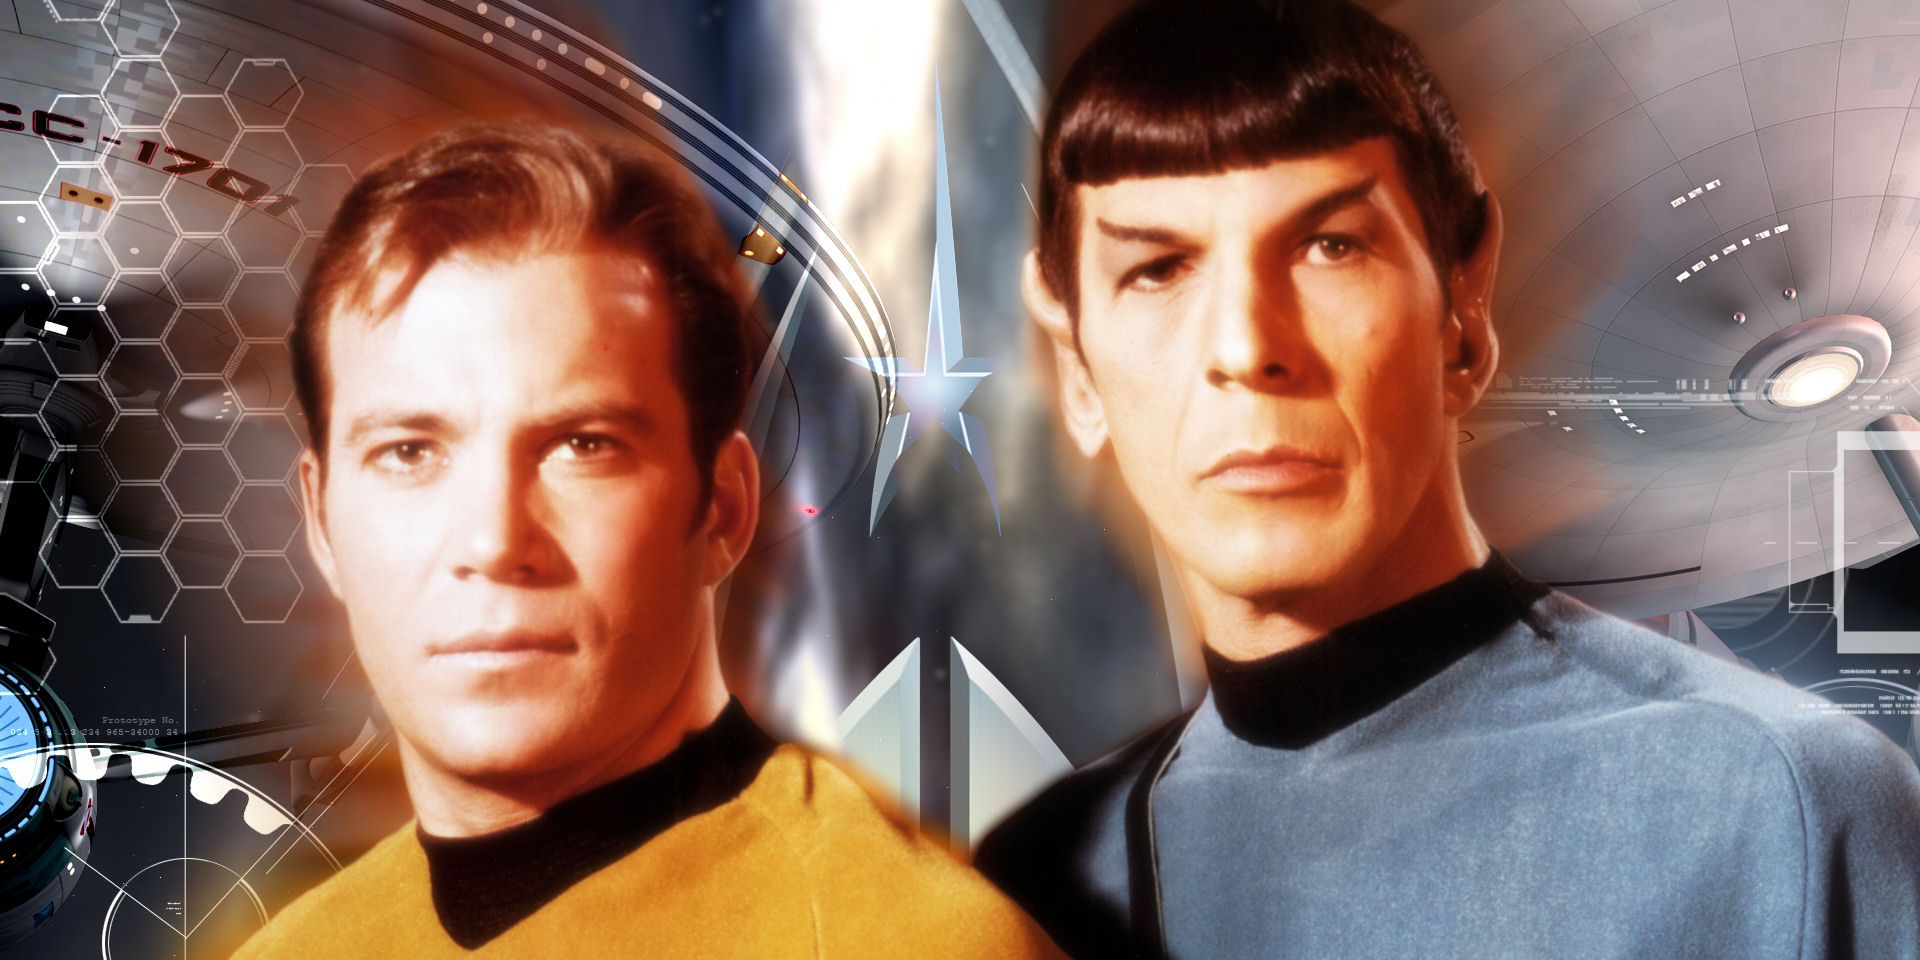 Star Trek, scienza ultima frontiera!